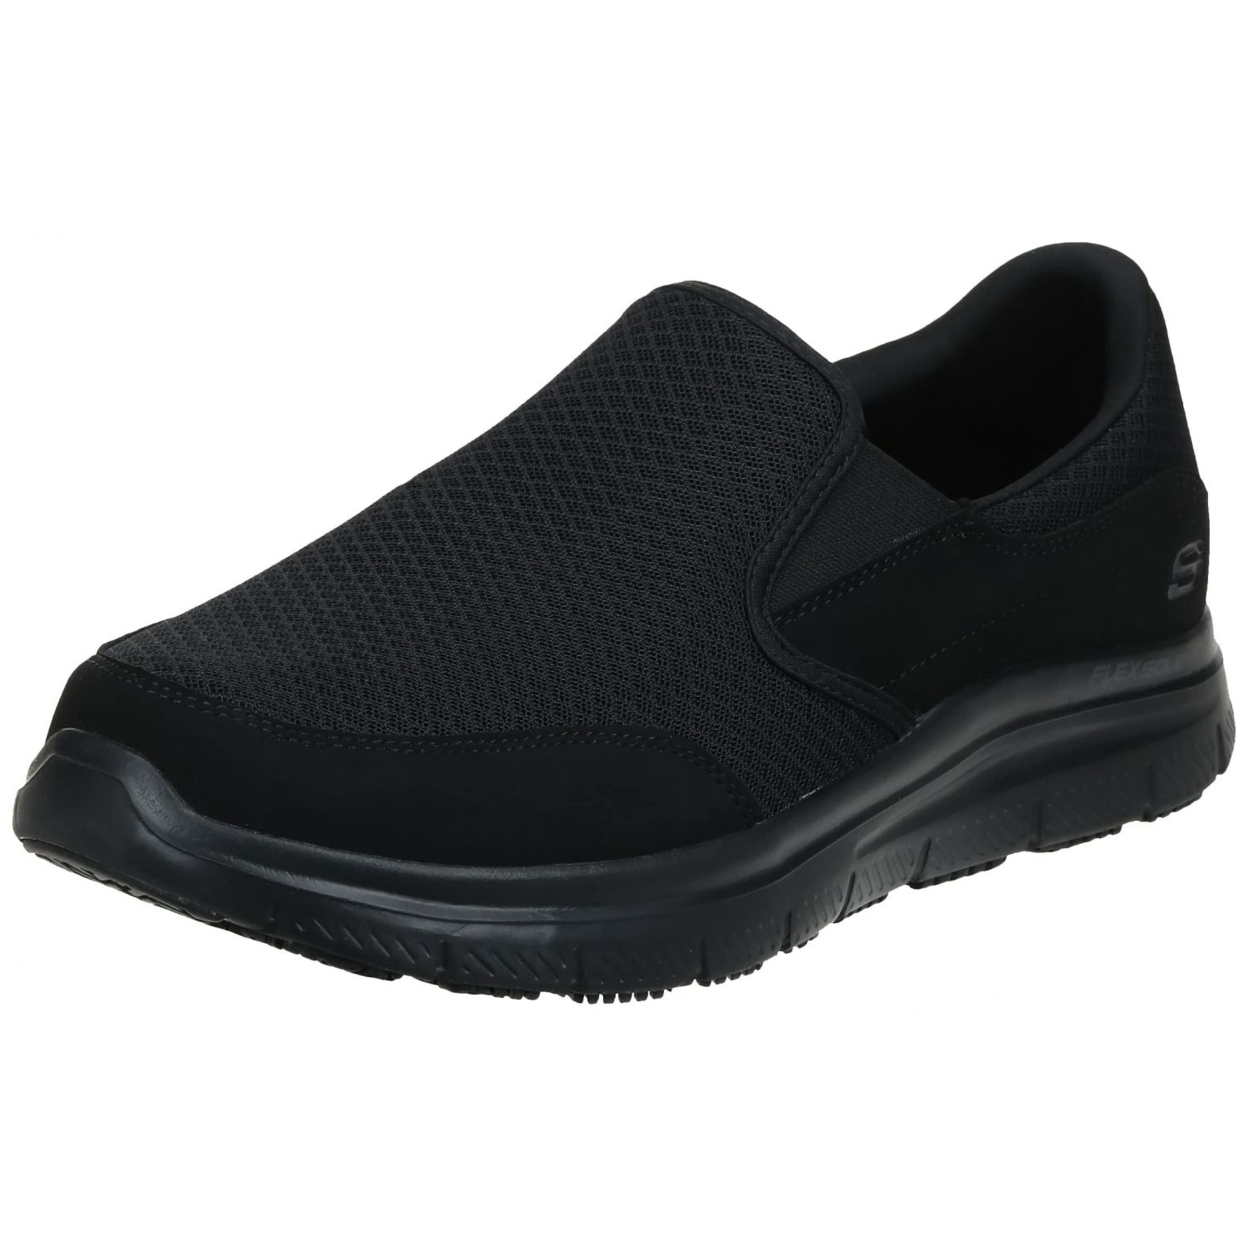 Skechers For Work Men's Flex Advantage Mcallen Food Service Shoe ONE SIZE BLACK - BLACK, 10 Wide